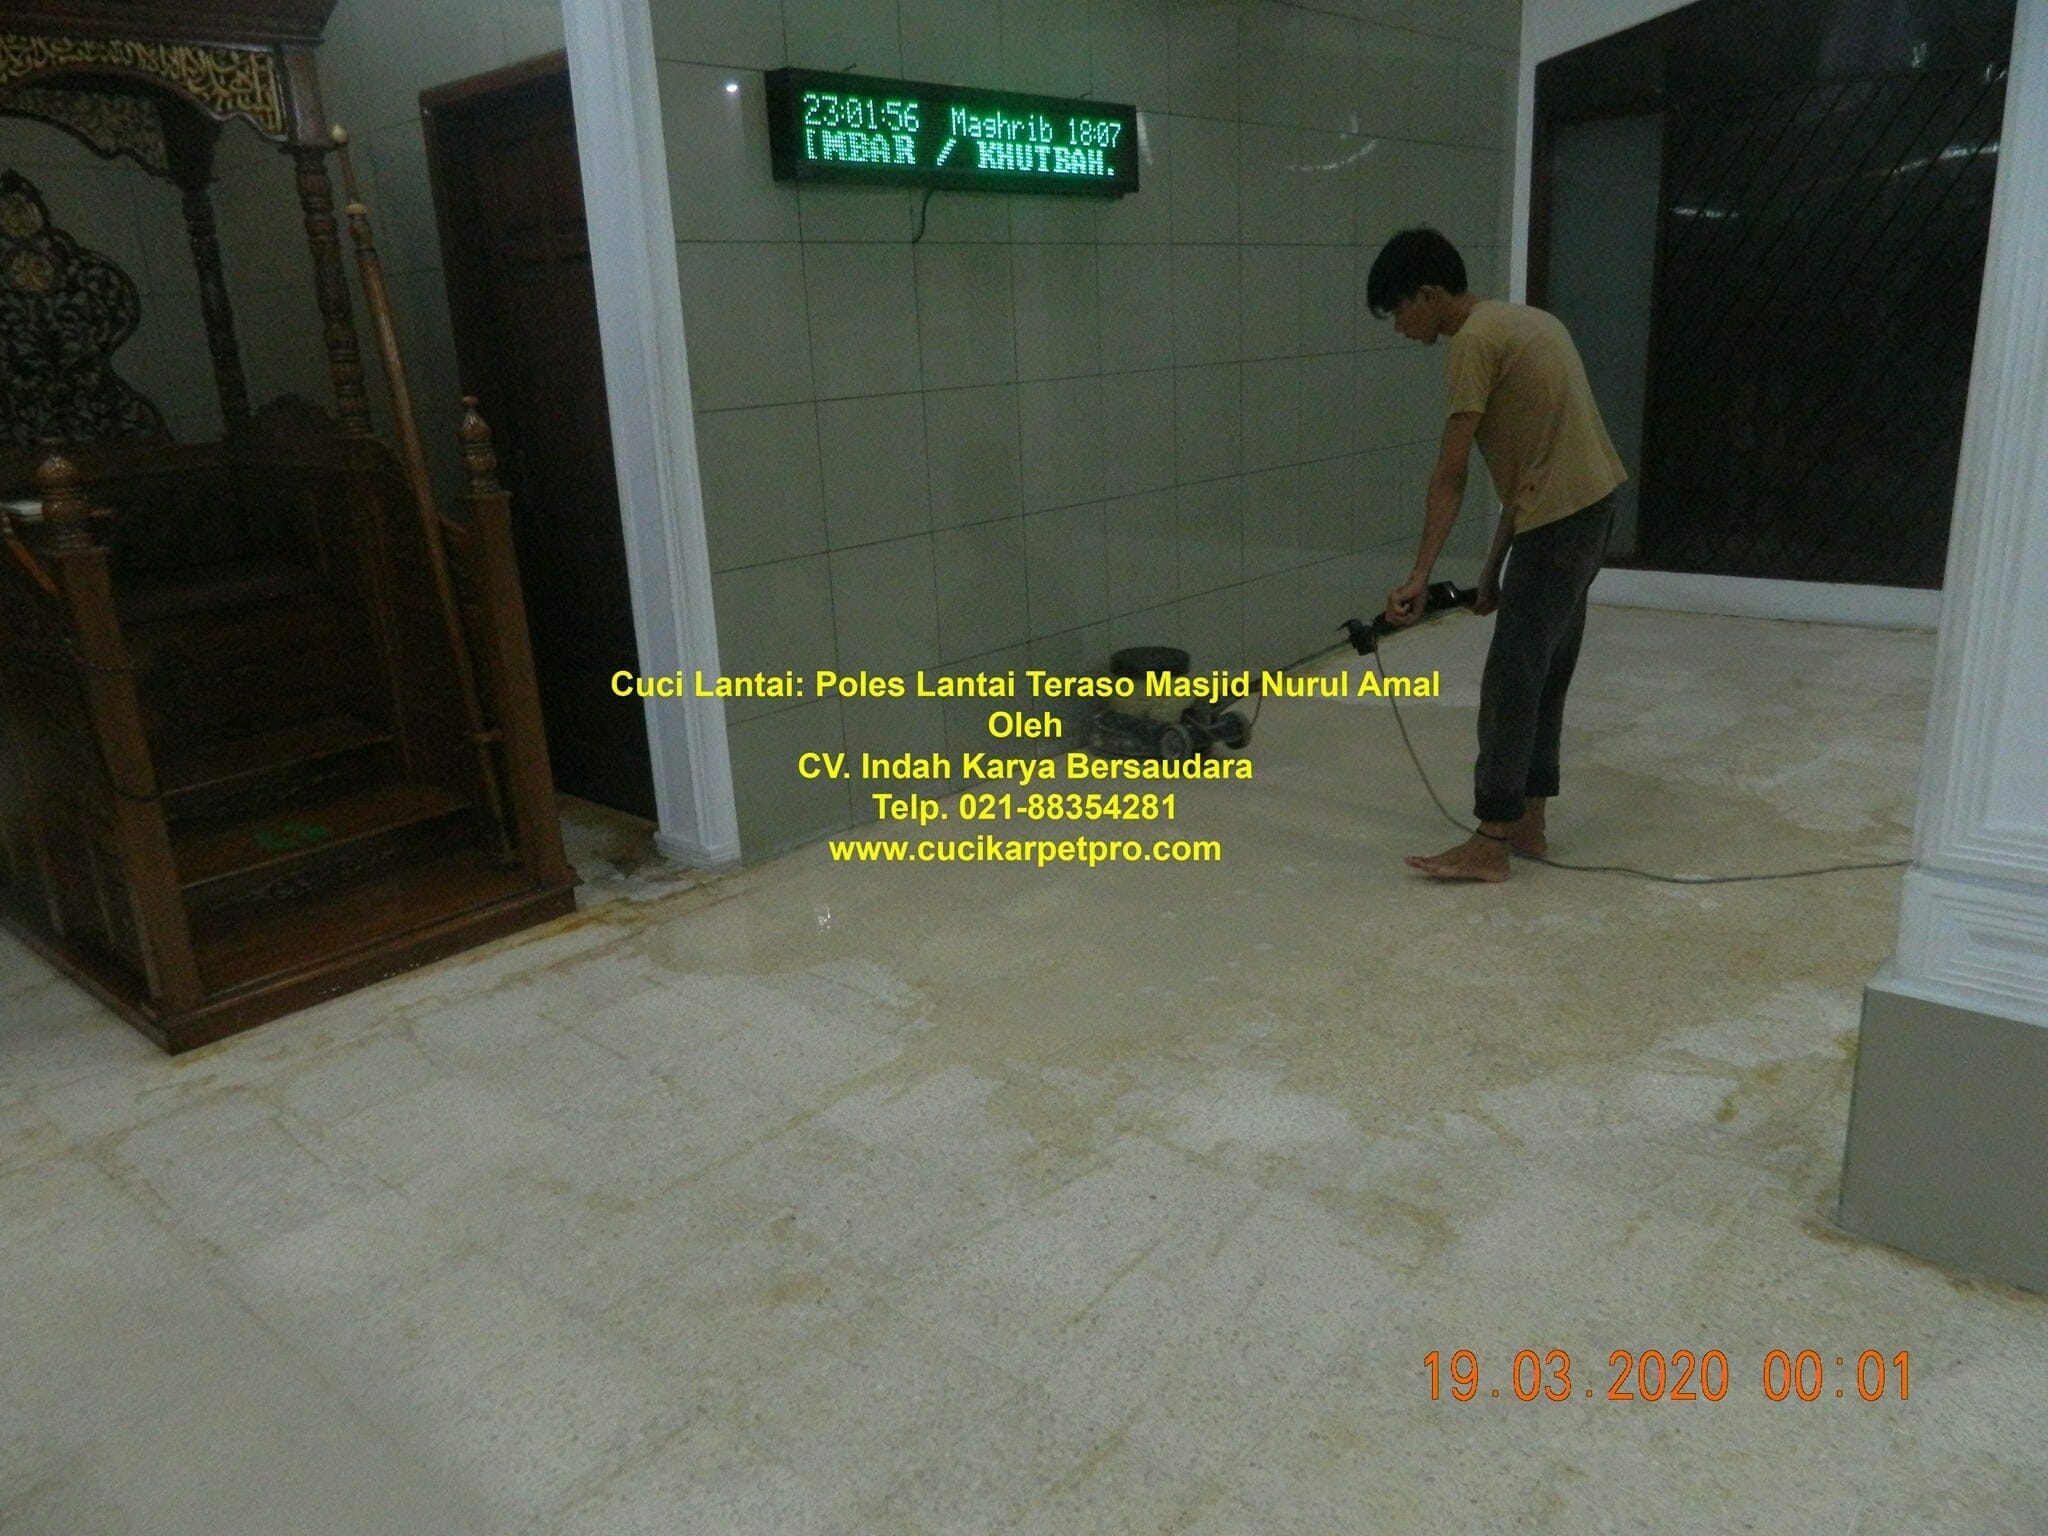 cuci lantai: poles lantai teraso masjid nurul amal 39